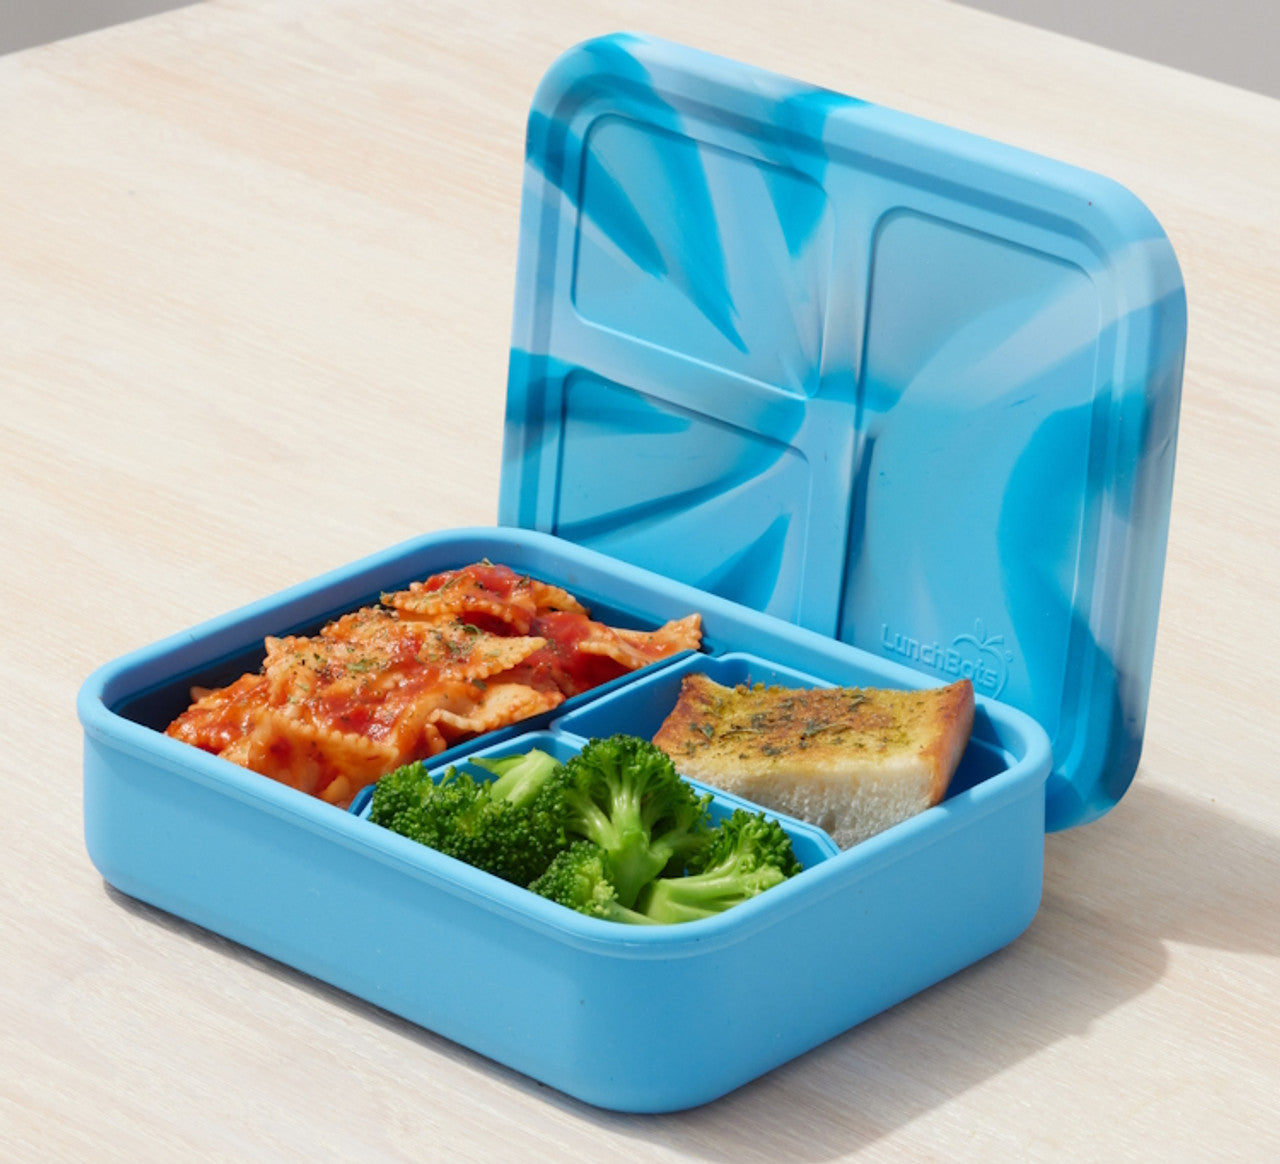 Lunchbots Build-A-Bento Large Platinum Silicone Bento Box